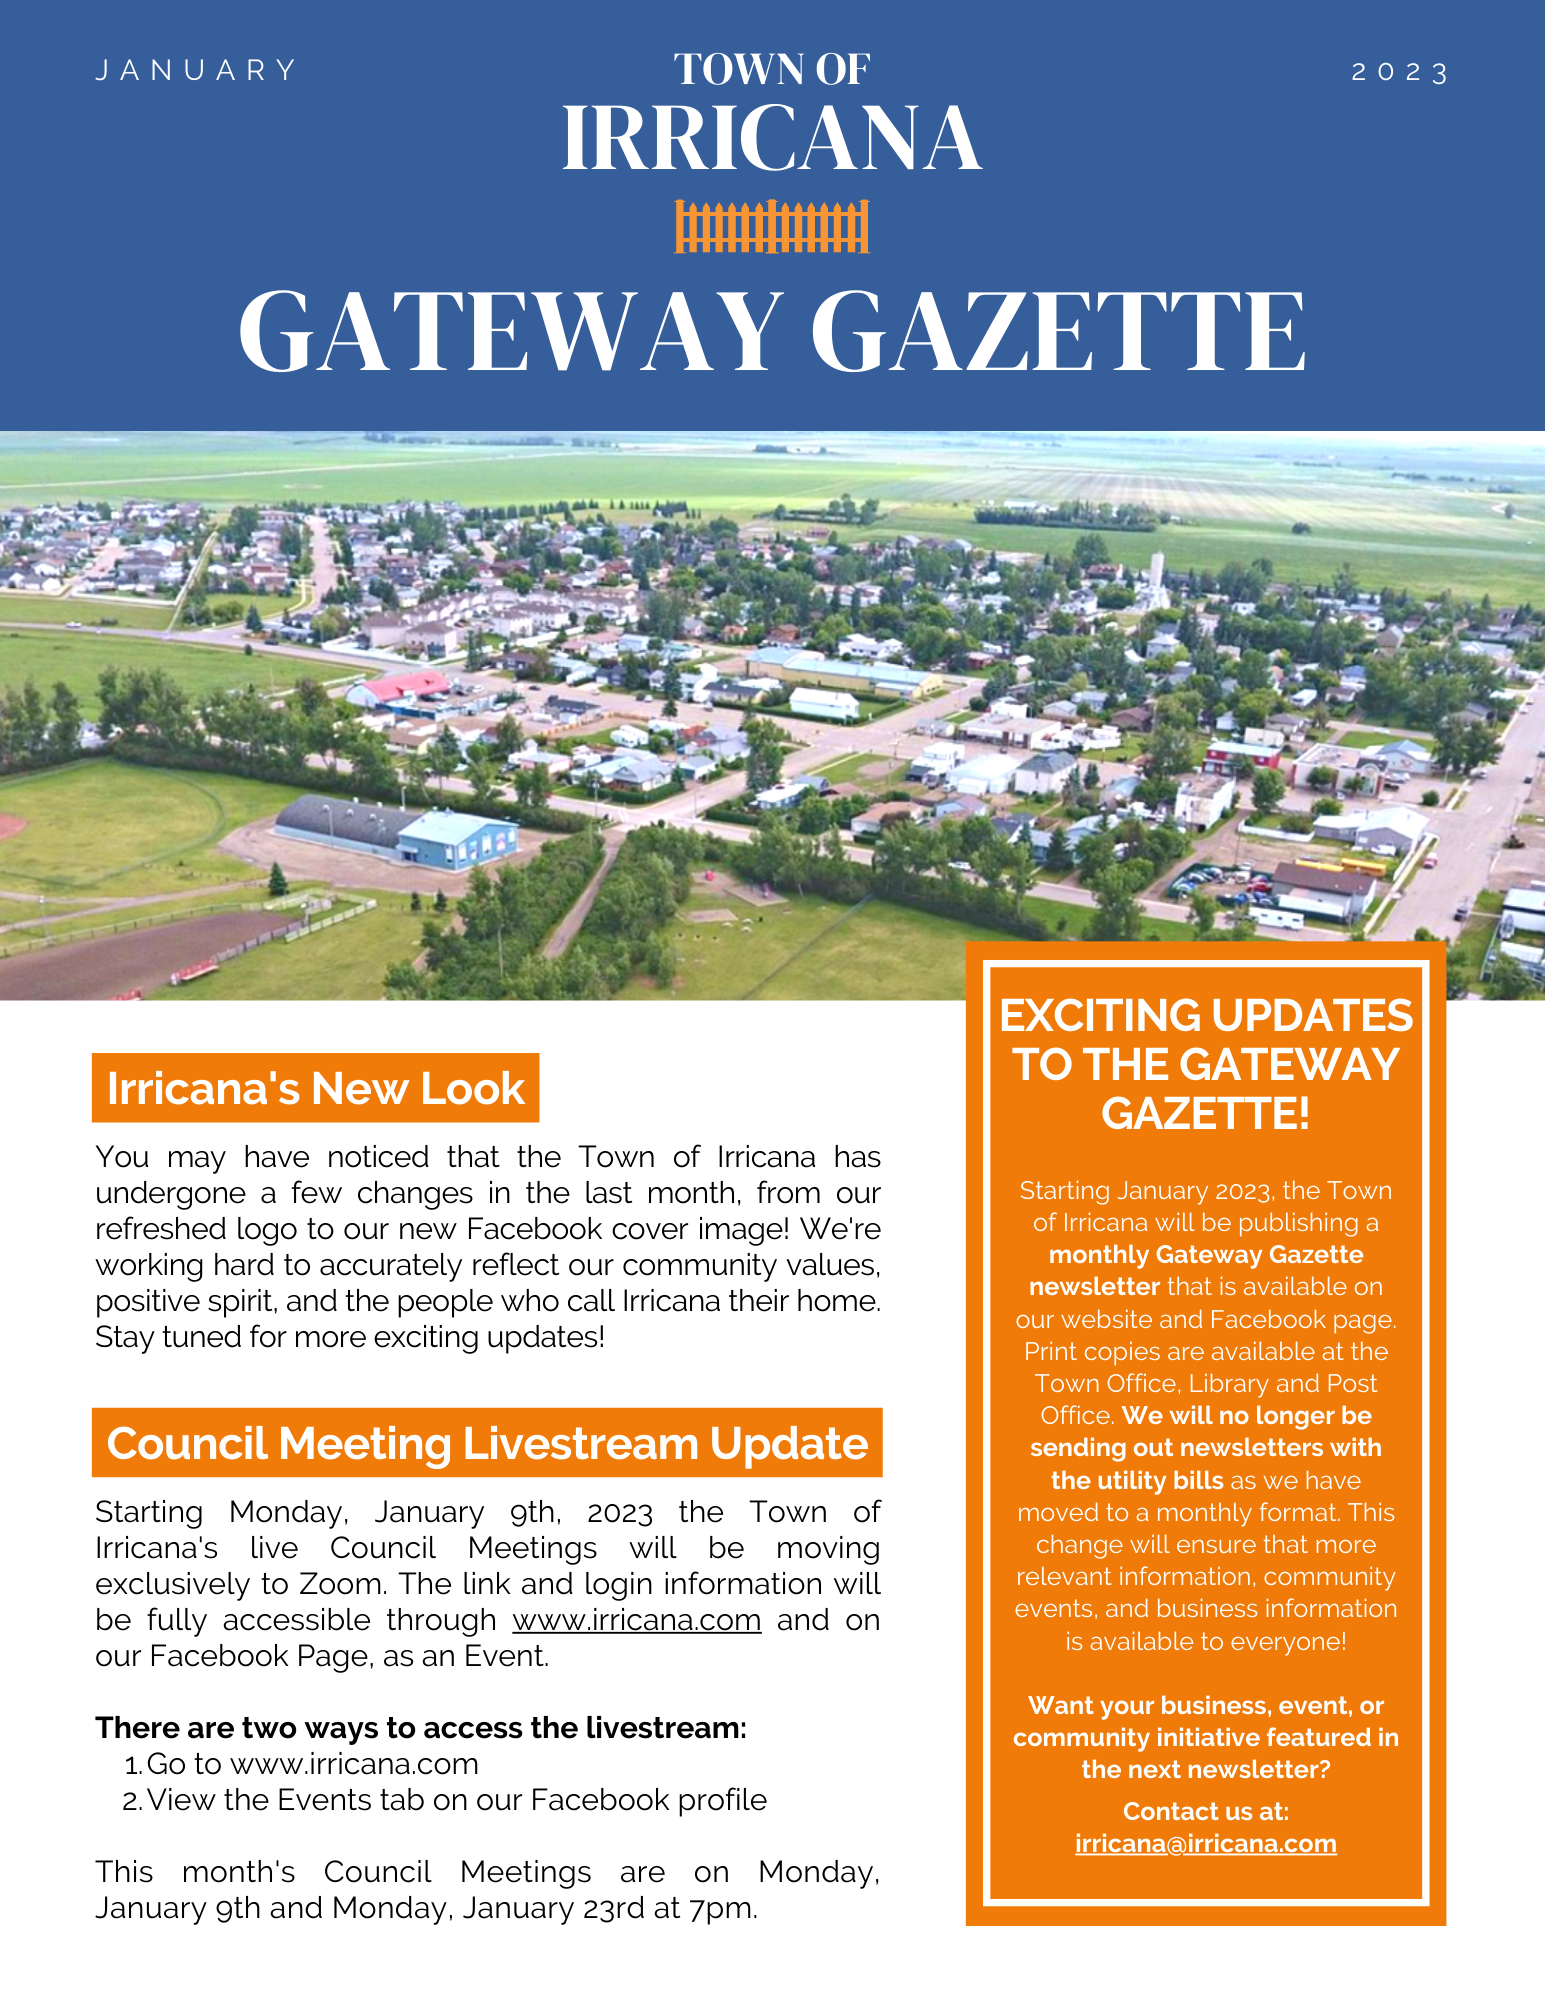 Town of Irricana Gateway Gazette Newsletter January 2023